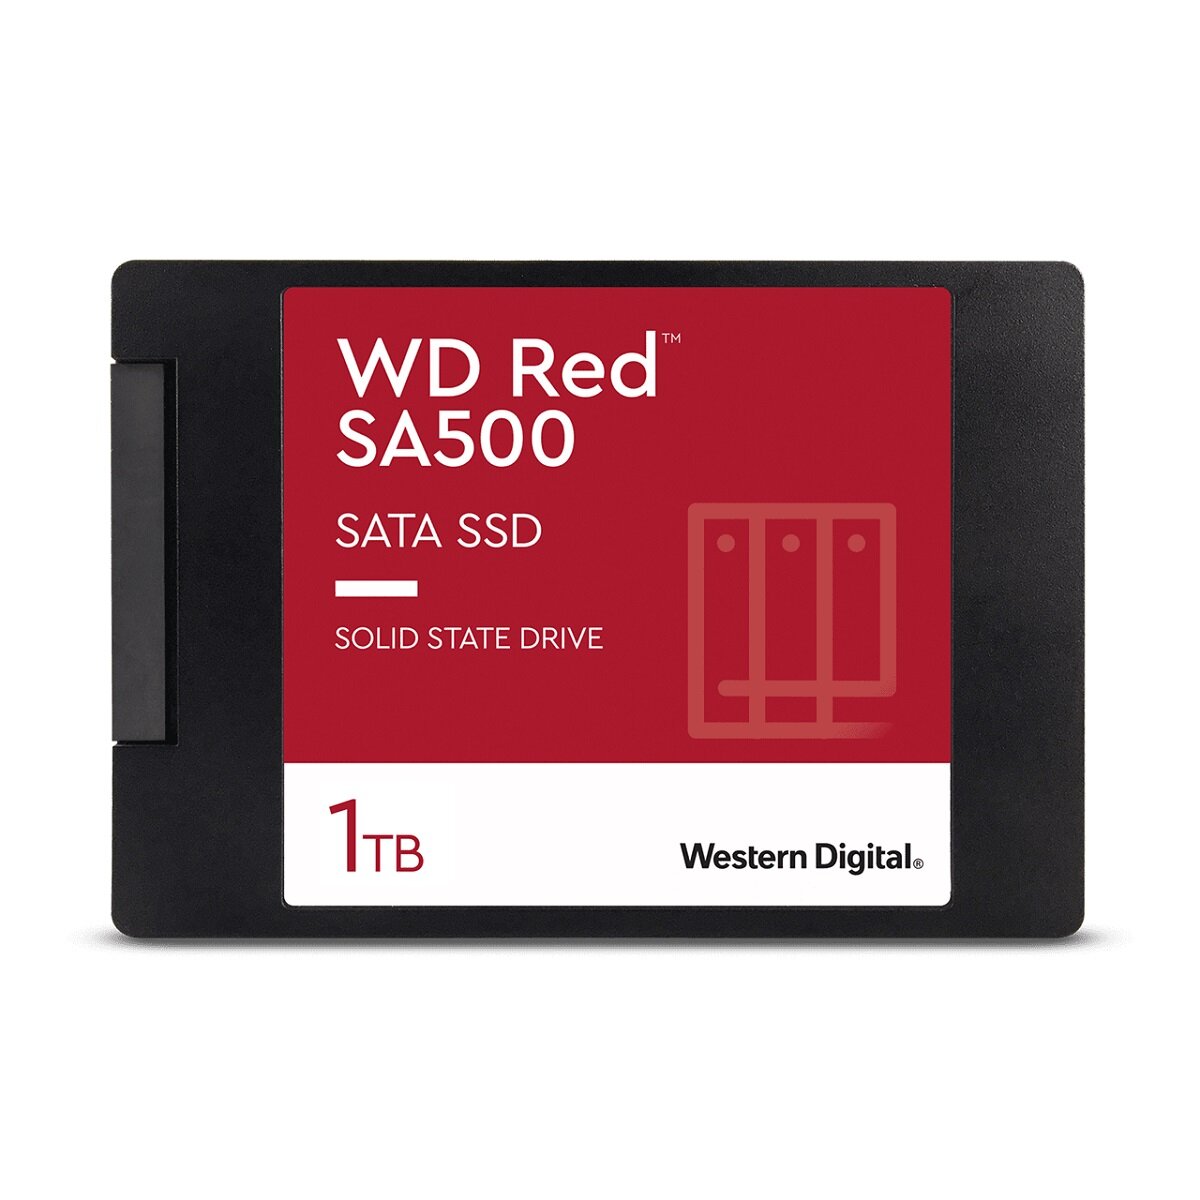 Dysk SSD WD Red SA500 1TB WDS100T1R0A widok od przodu